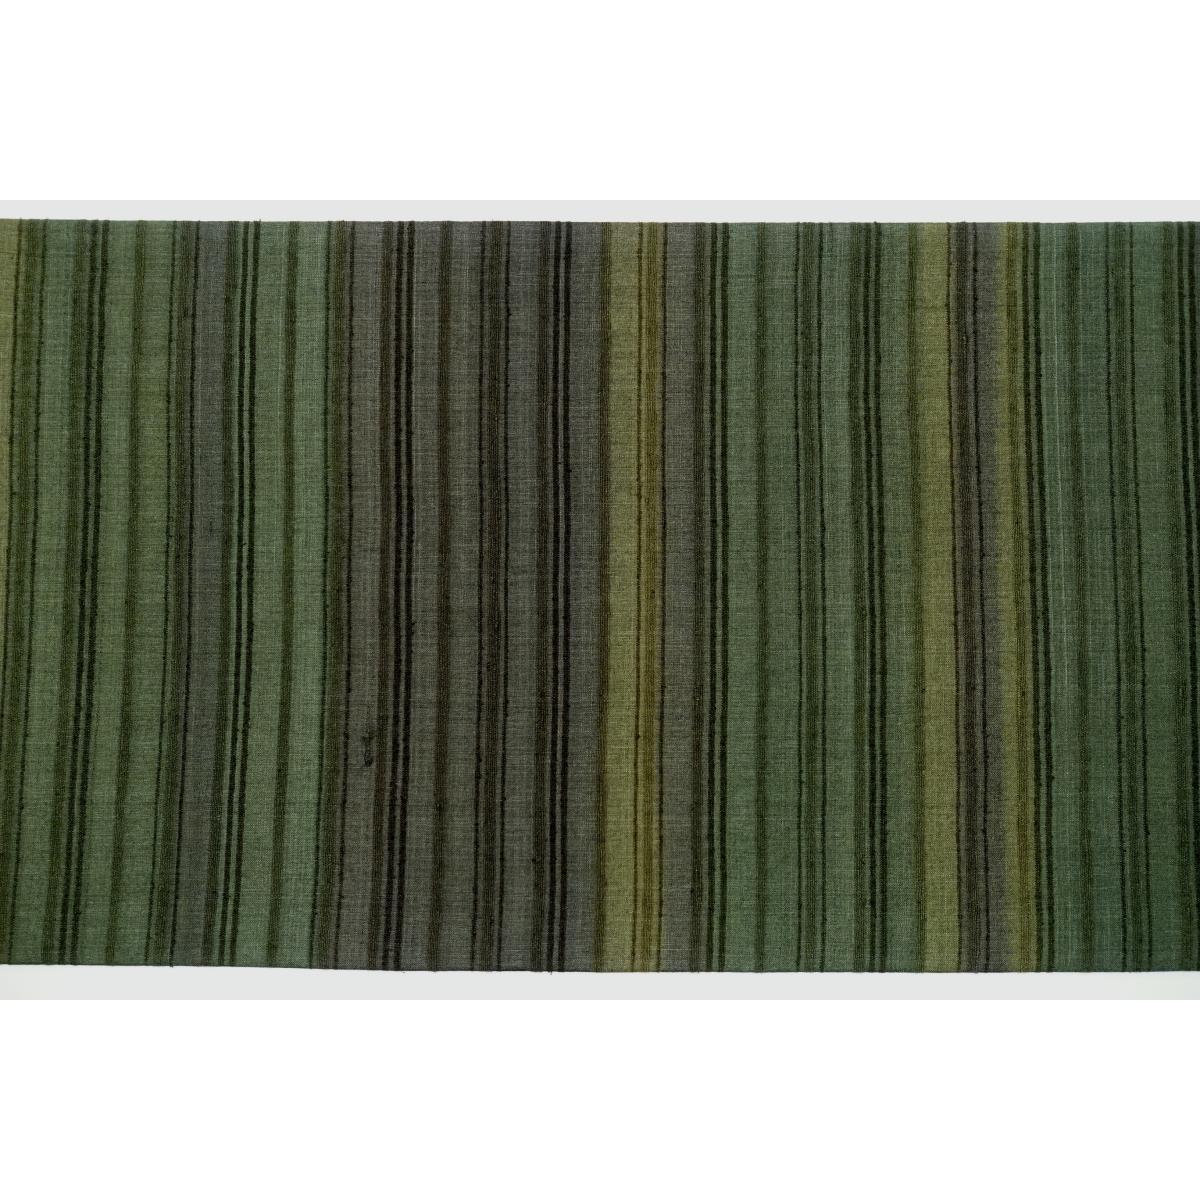 Fukuro obi, pongee weave, wild silk thread, full pattern